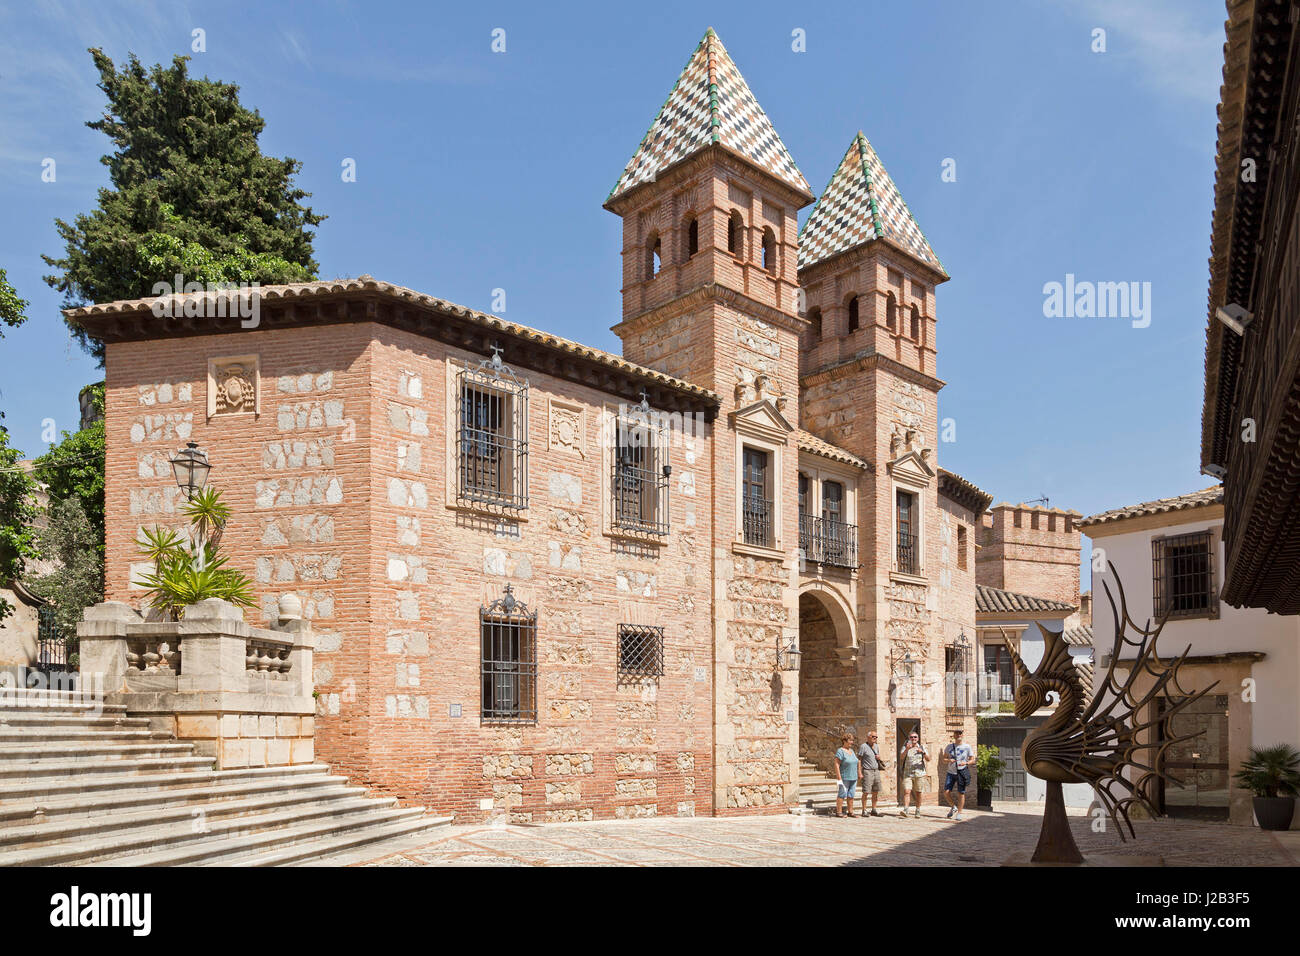 Patio de Carlos V al Poble Espanyol in Palma de Mallorca, Spagna Foto Stock